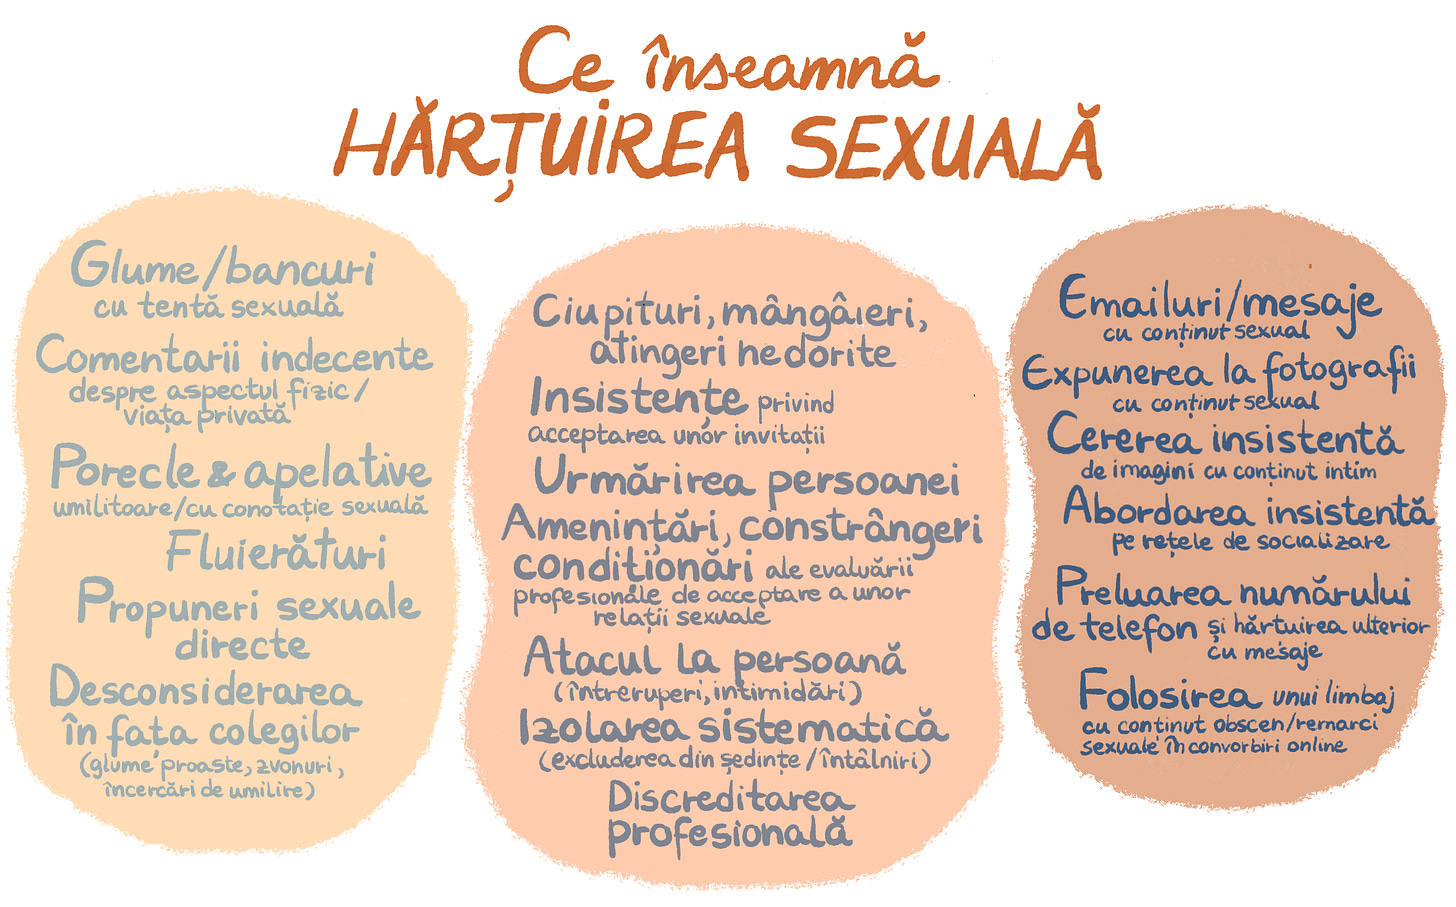 A list of behaviors that constitute sexual harrasment.